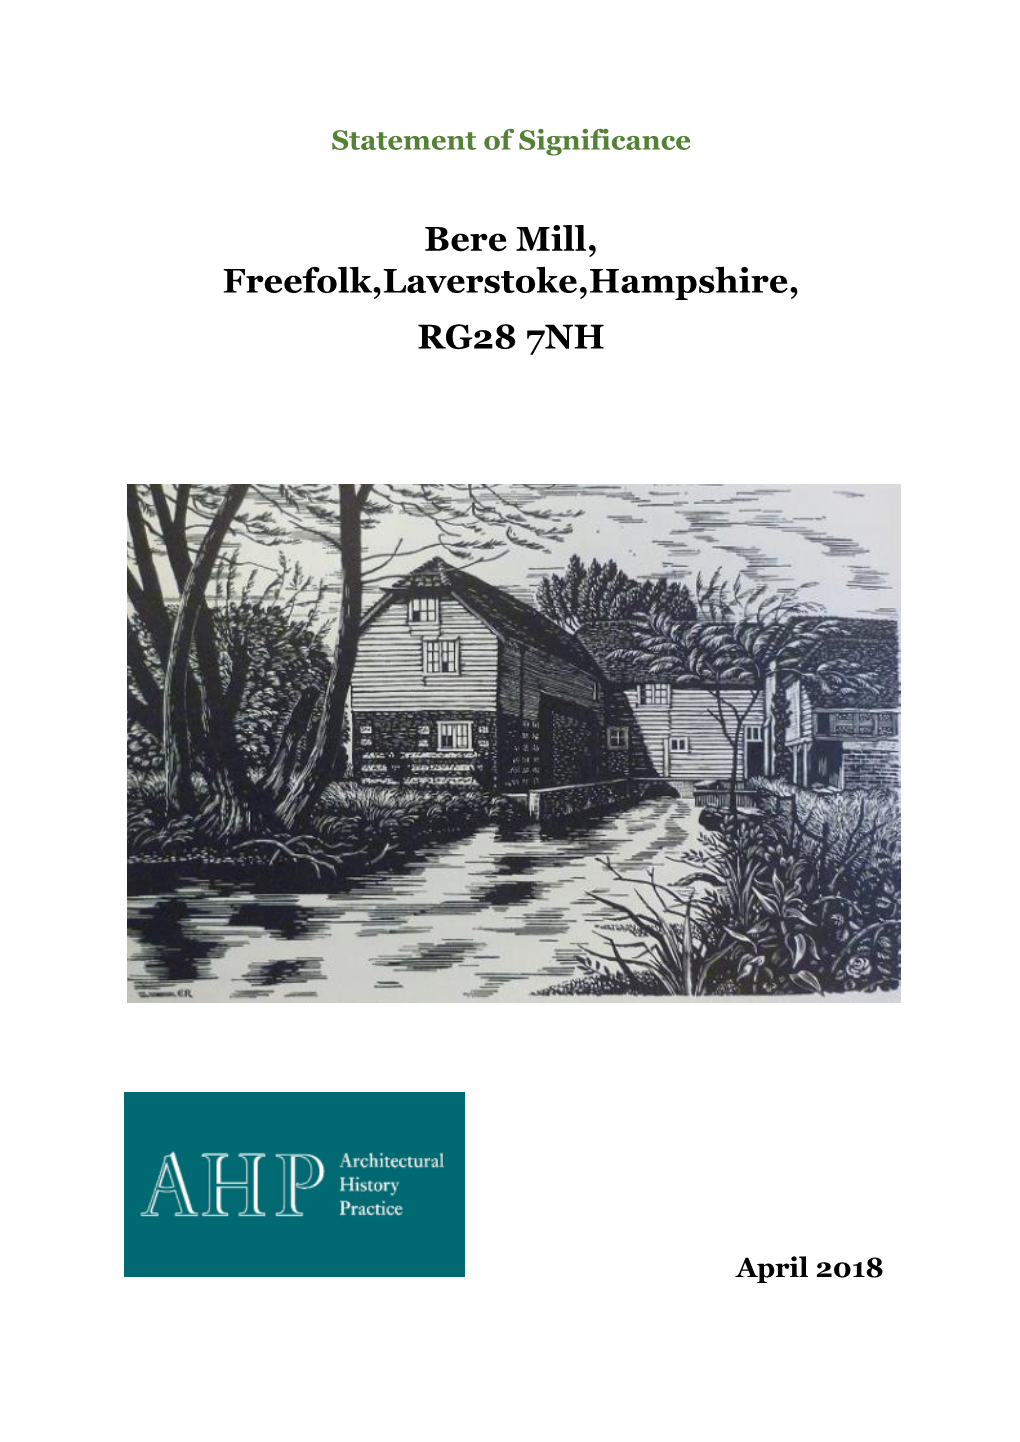 Bere Mill, Freefolk,Laverstoke,Hampshire, RG28 7NH